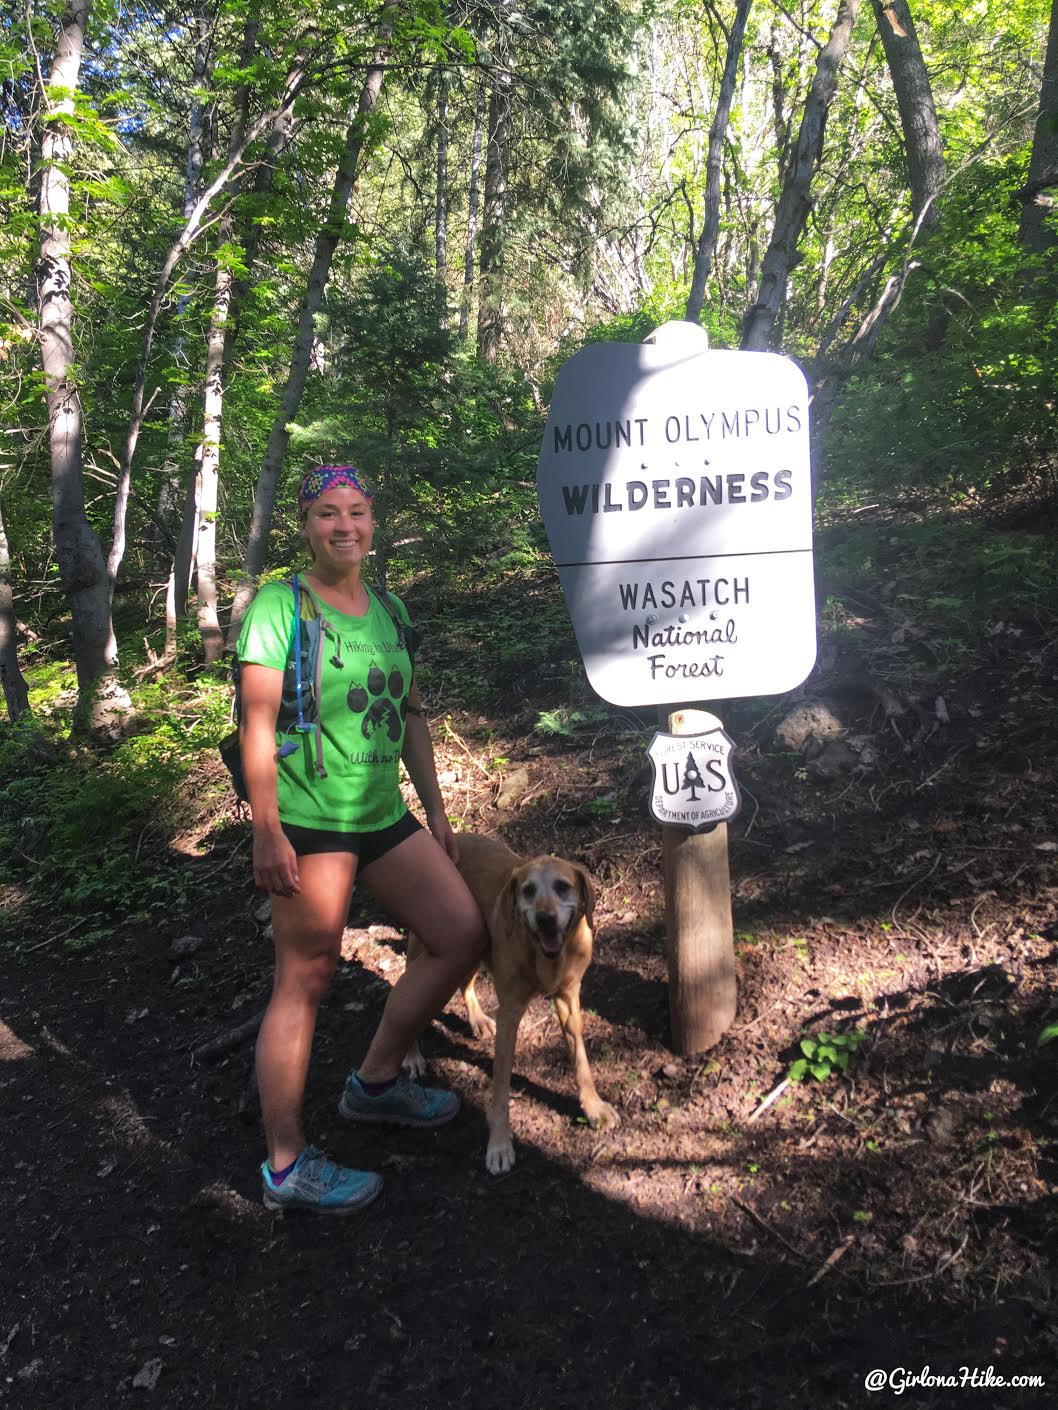 Hiking the Terraces Trail, Millcreek Canyon, Hiking in Utah with Dogs, Hiking in Millcreek Canyon